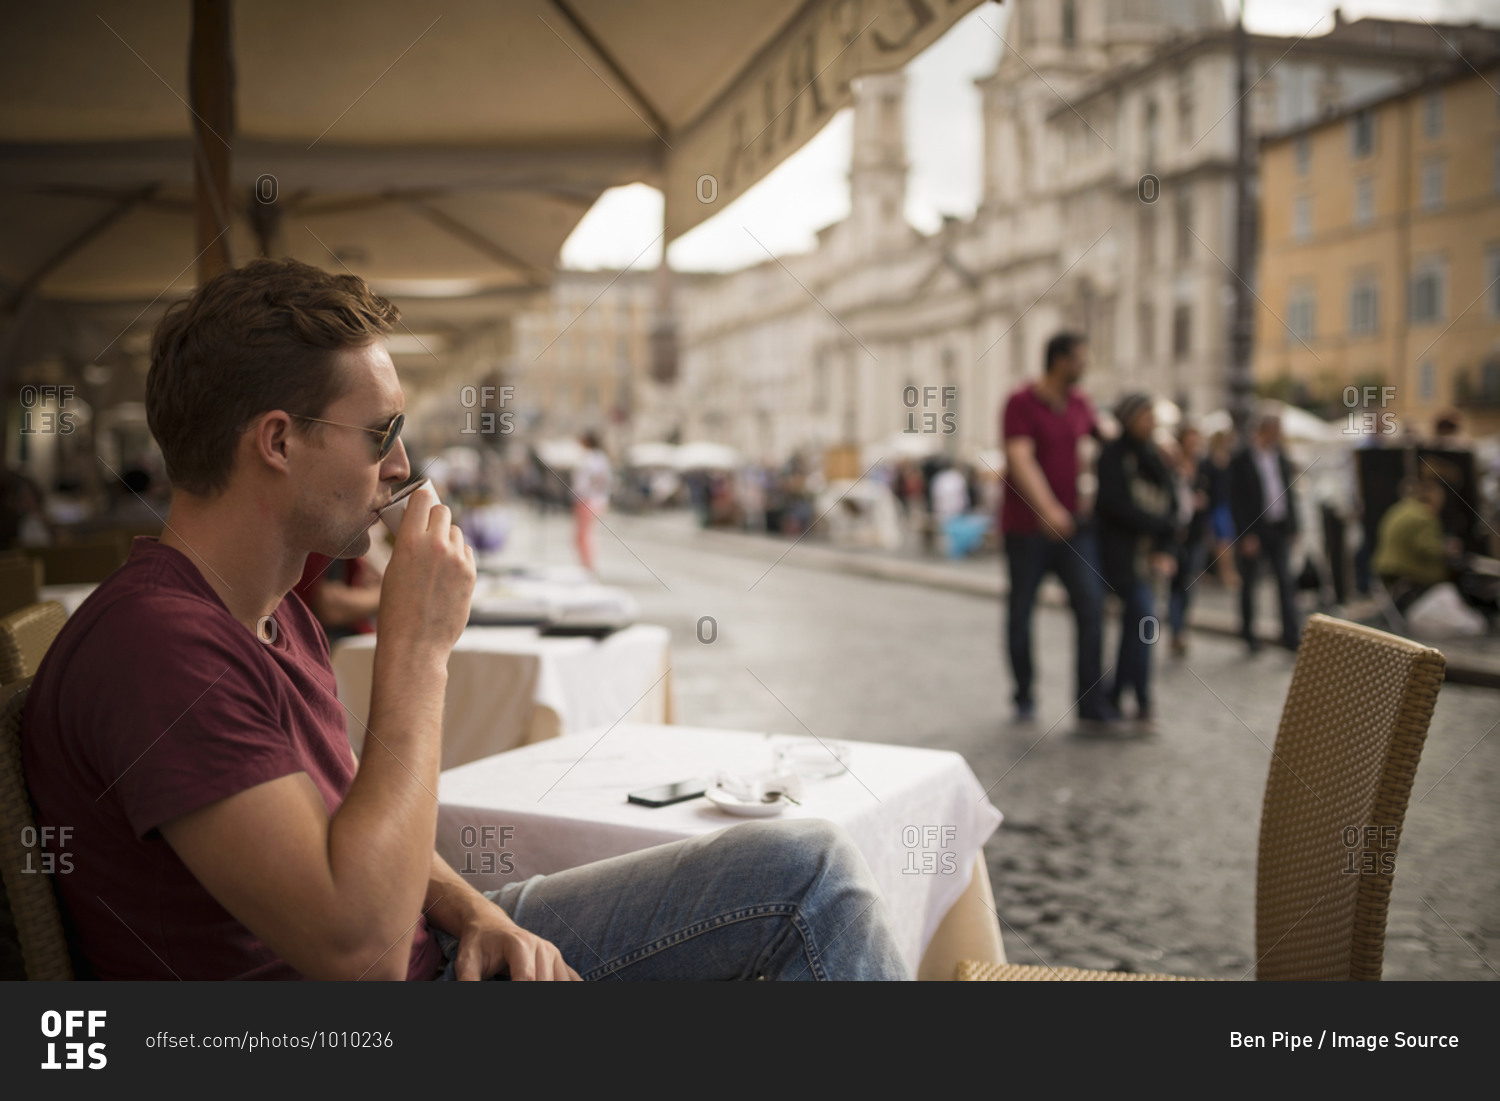 Man enjoying espresso at restaurant, Piazza Navona, Rome, Italy